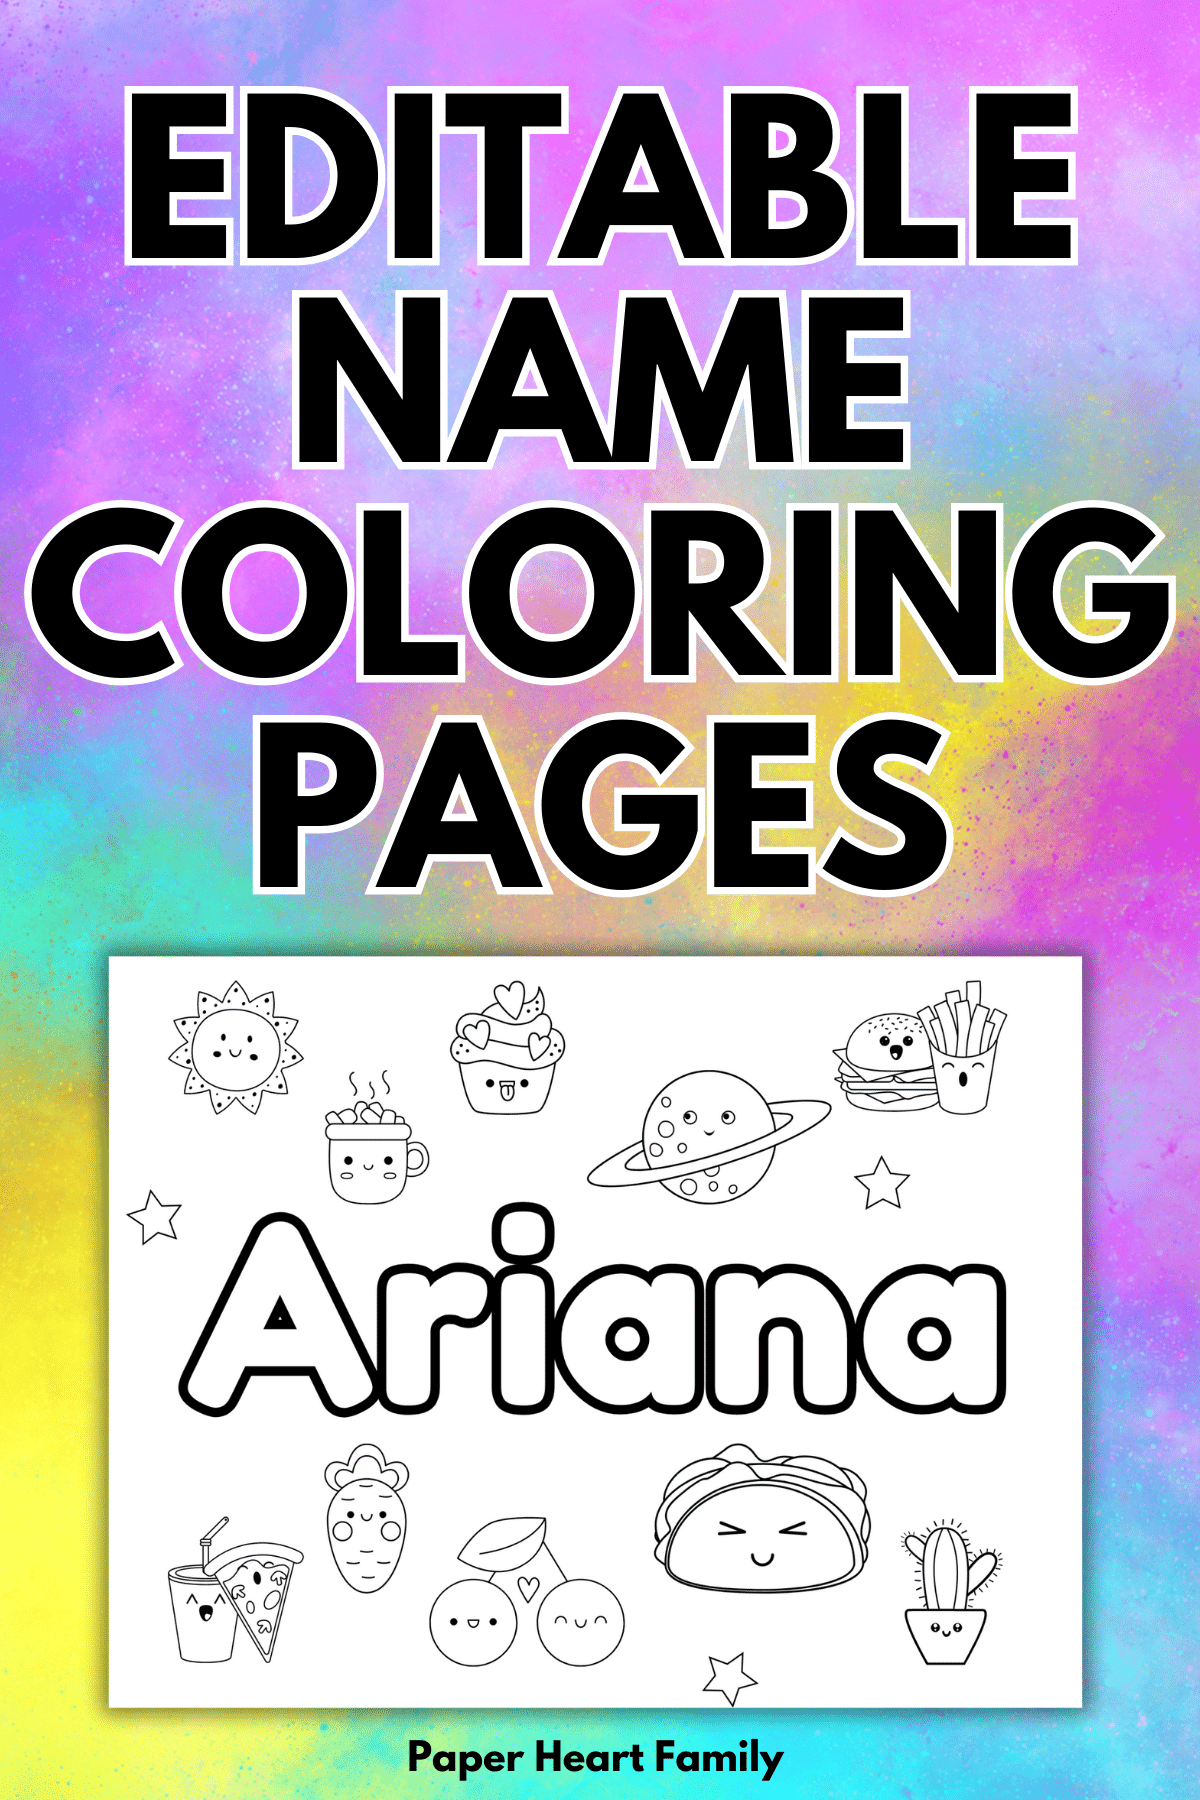 Kawaii coloring page with name Ariana